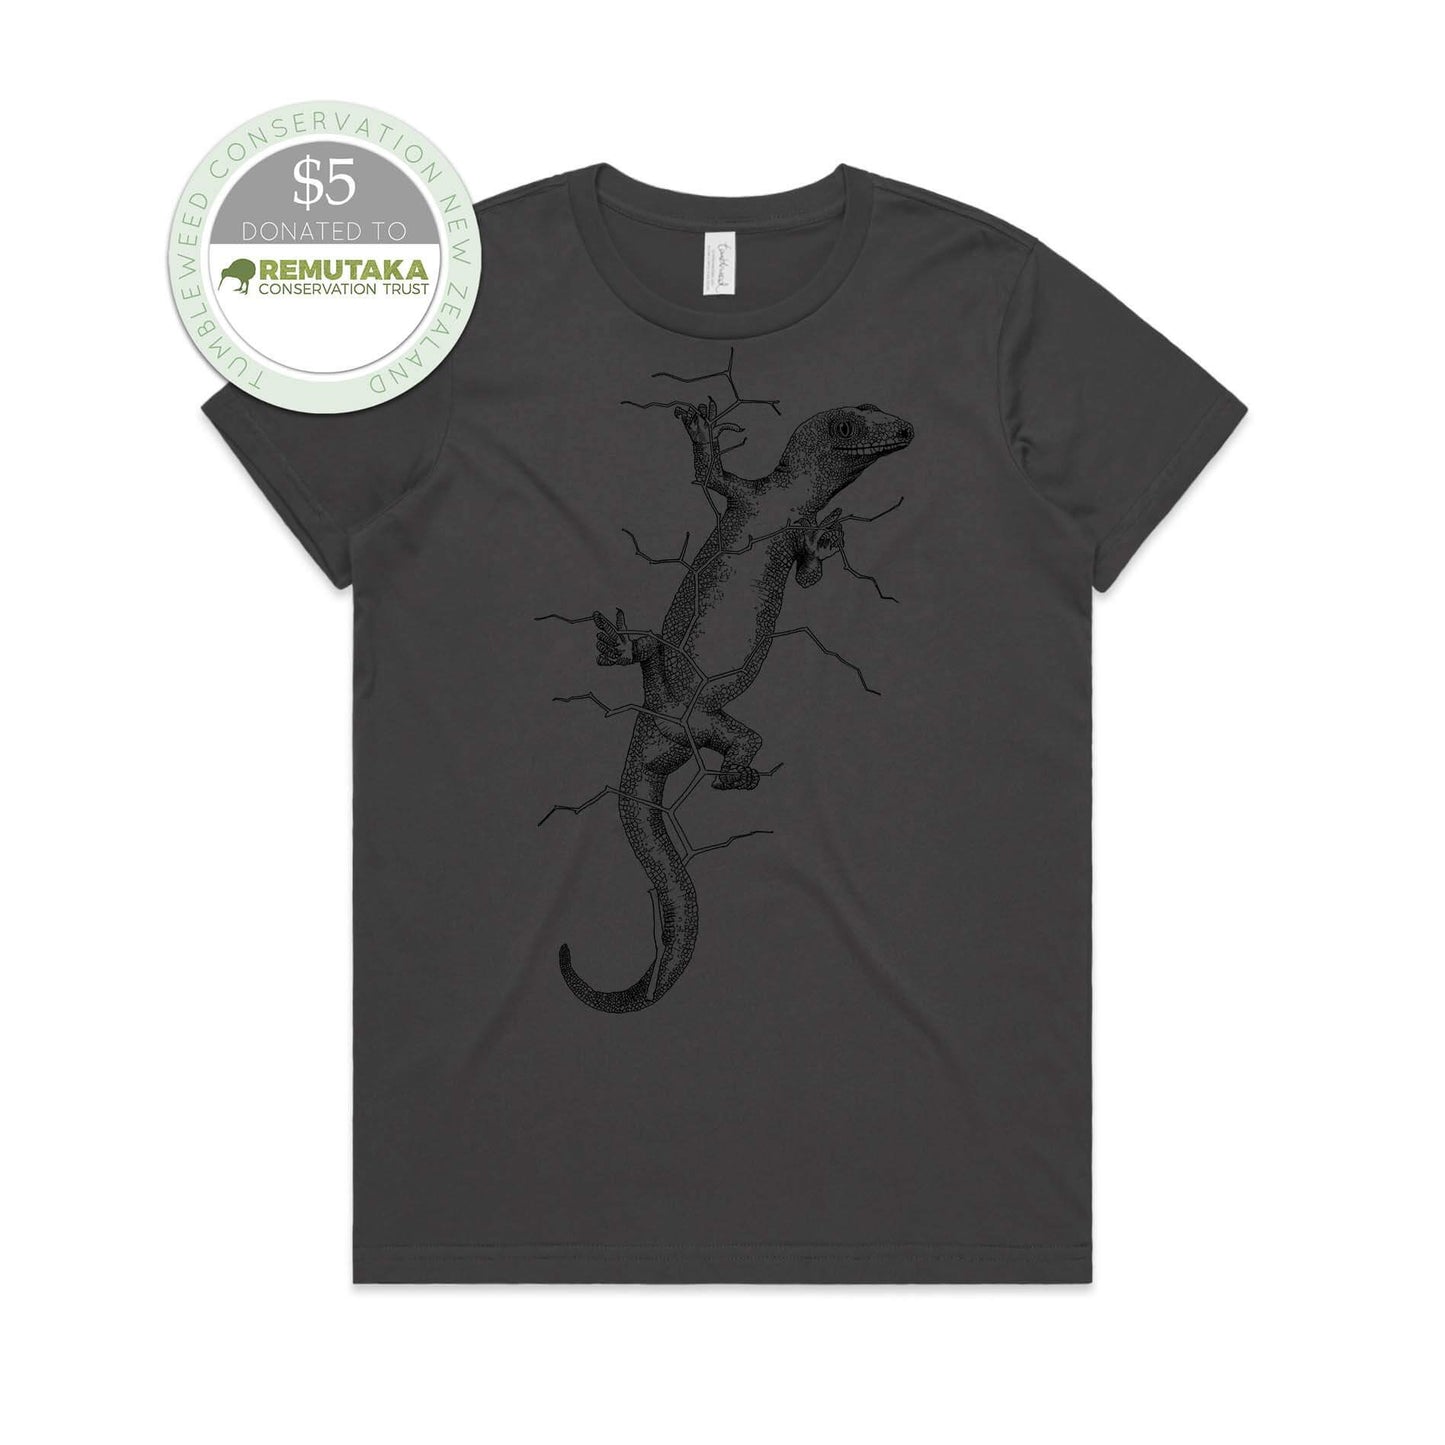 Charcoal, female t-shirt featuring a screen printed gecko design.